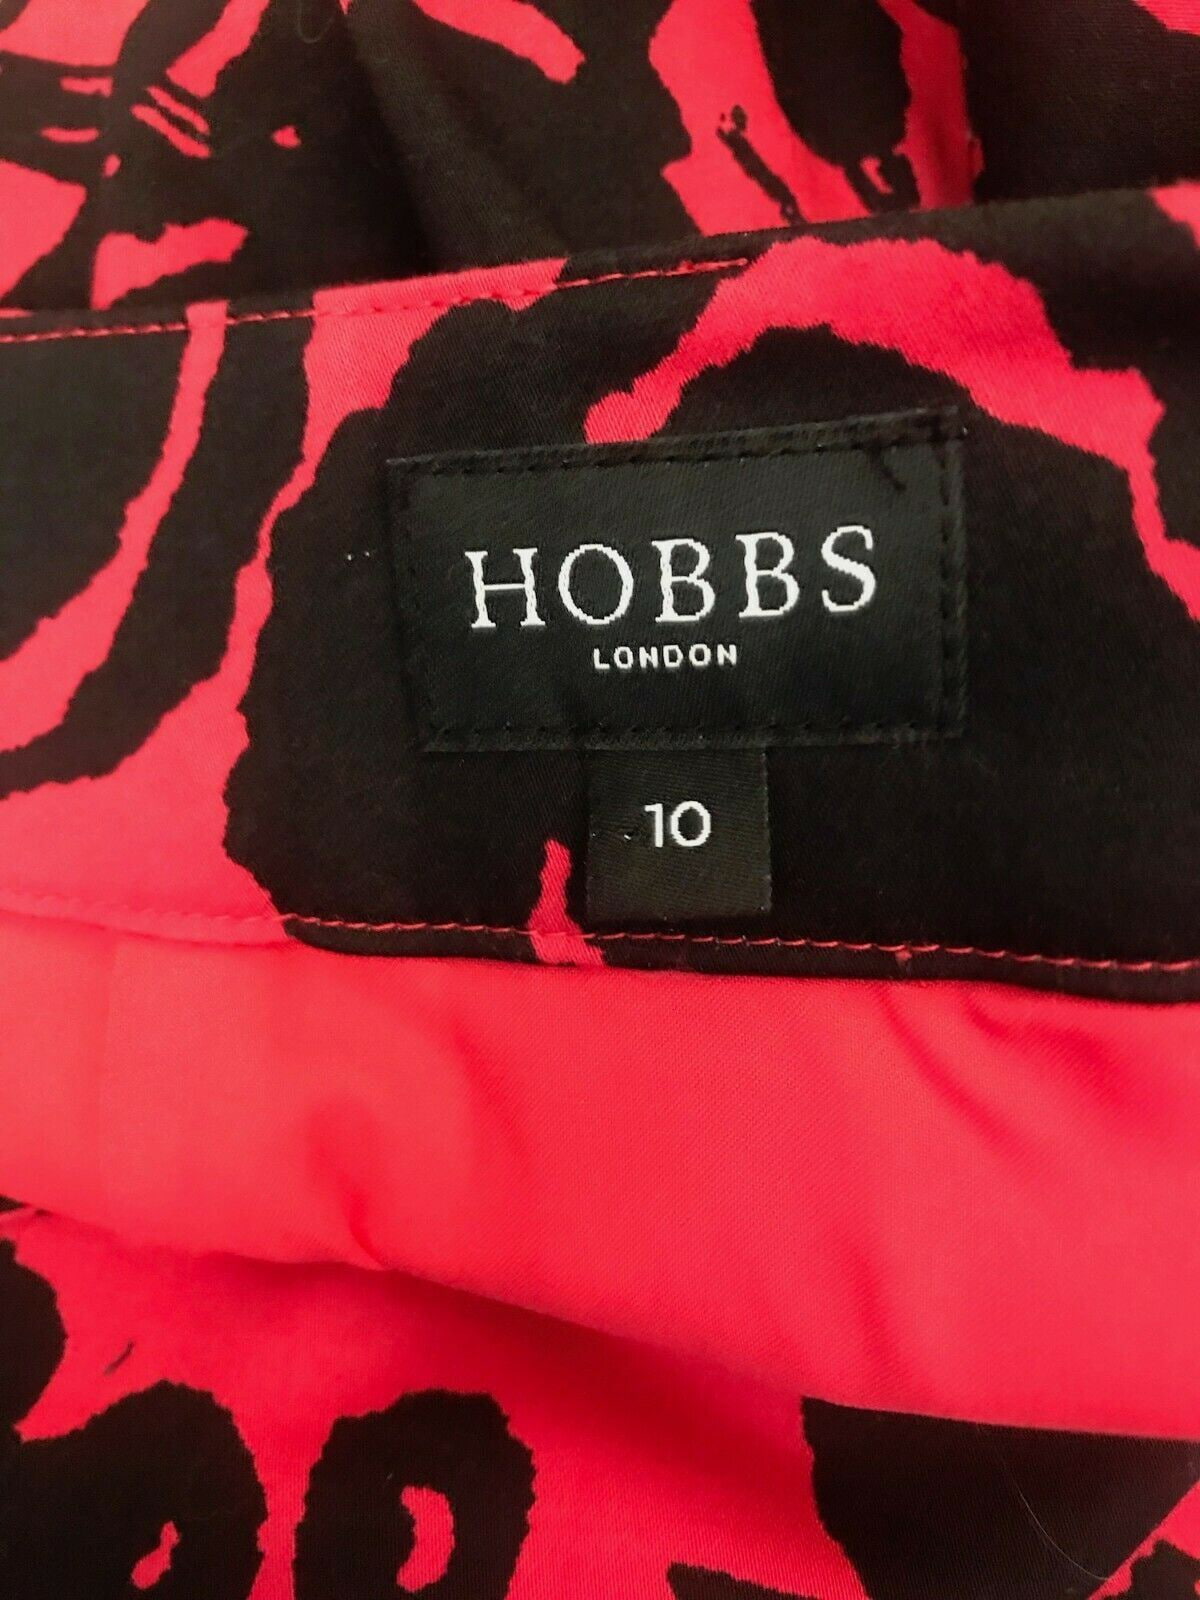 Hobbs London Black & Pink Floral Skirt UK 10 US 6 EU 38 Timeless Fashions